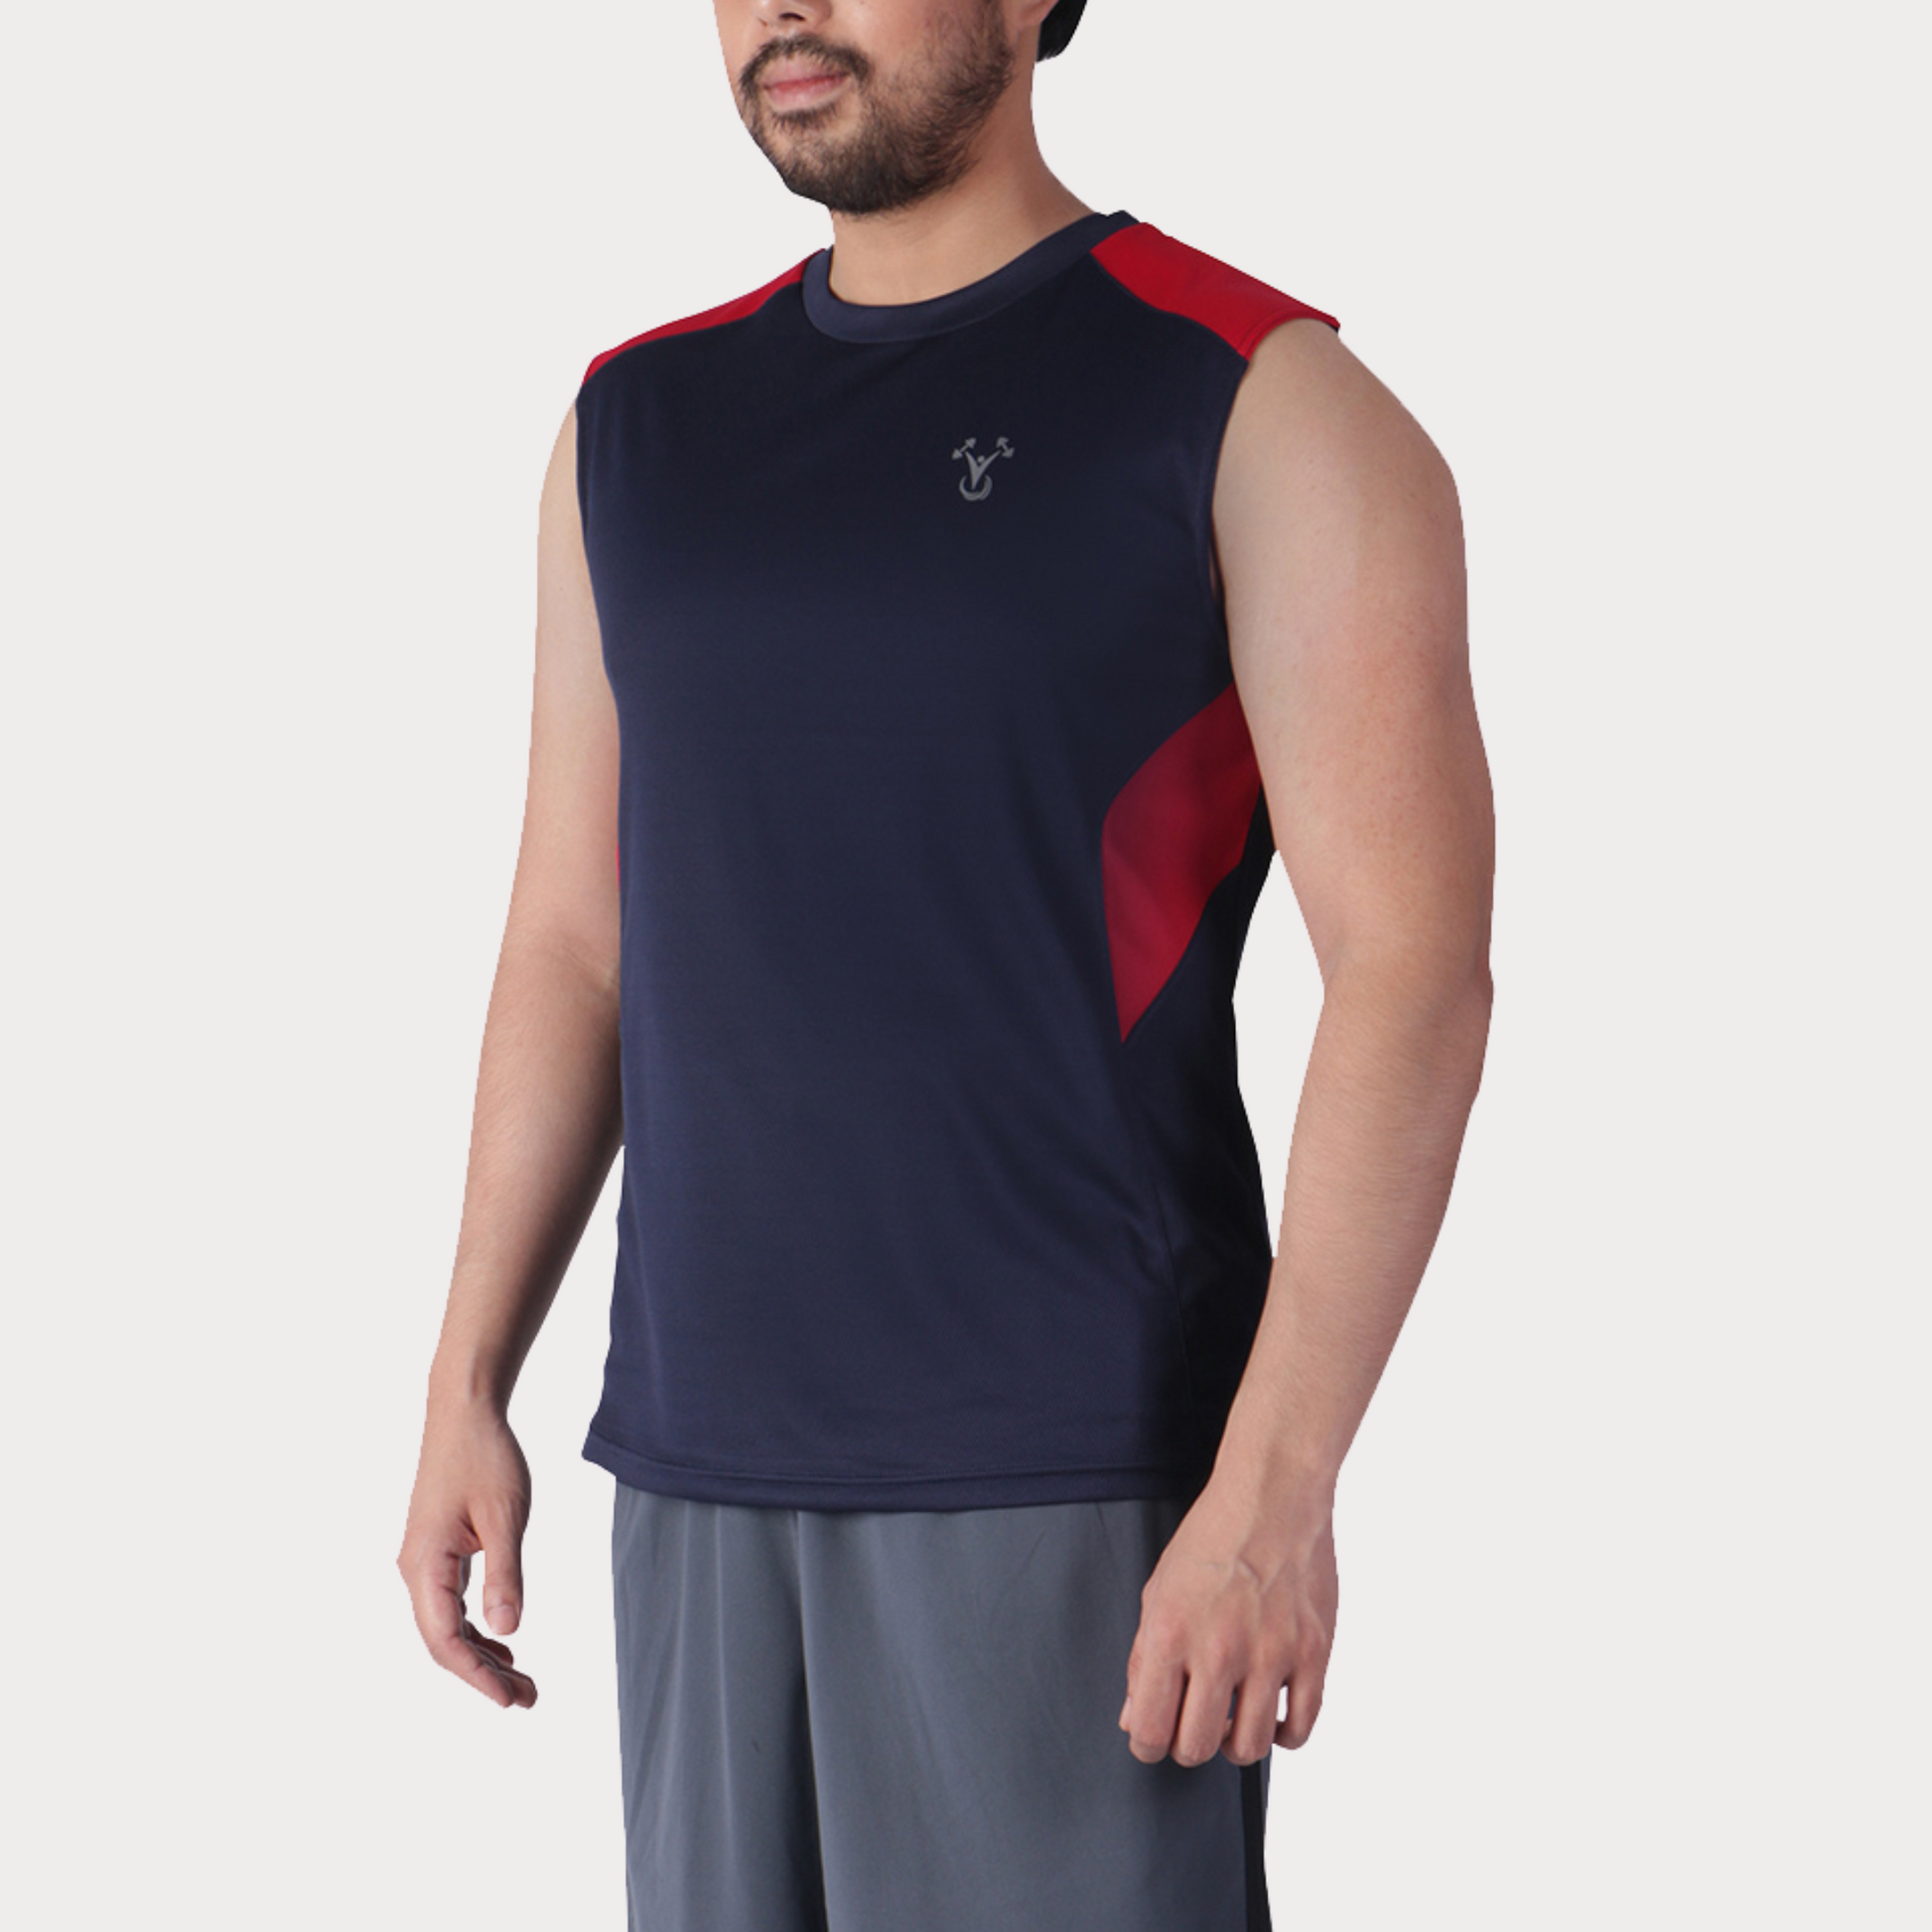 Sleeveless & Tank Activewear / Sportswear - Men's Wide Shoulder Muscle Tee - S /Xavier Navy - Outperformer